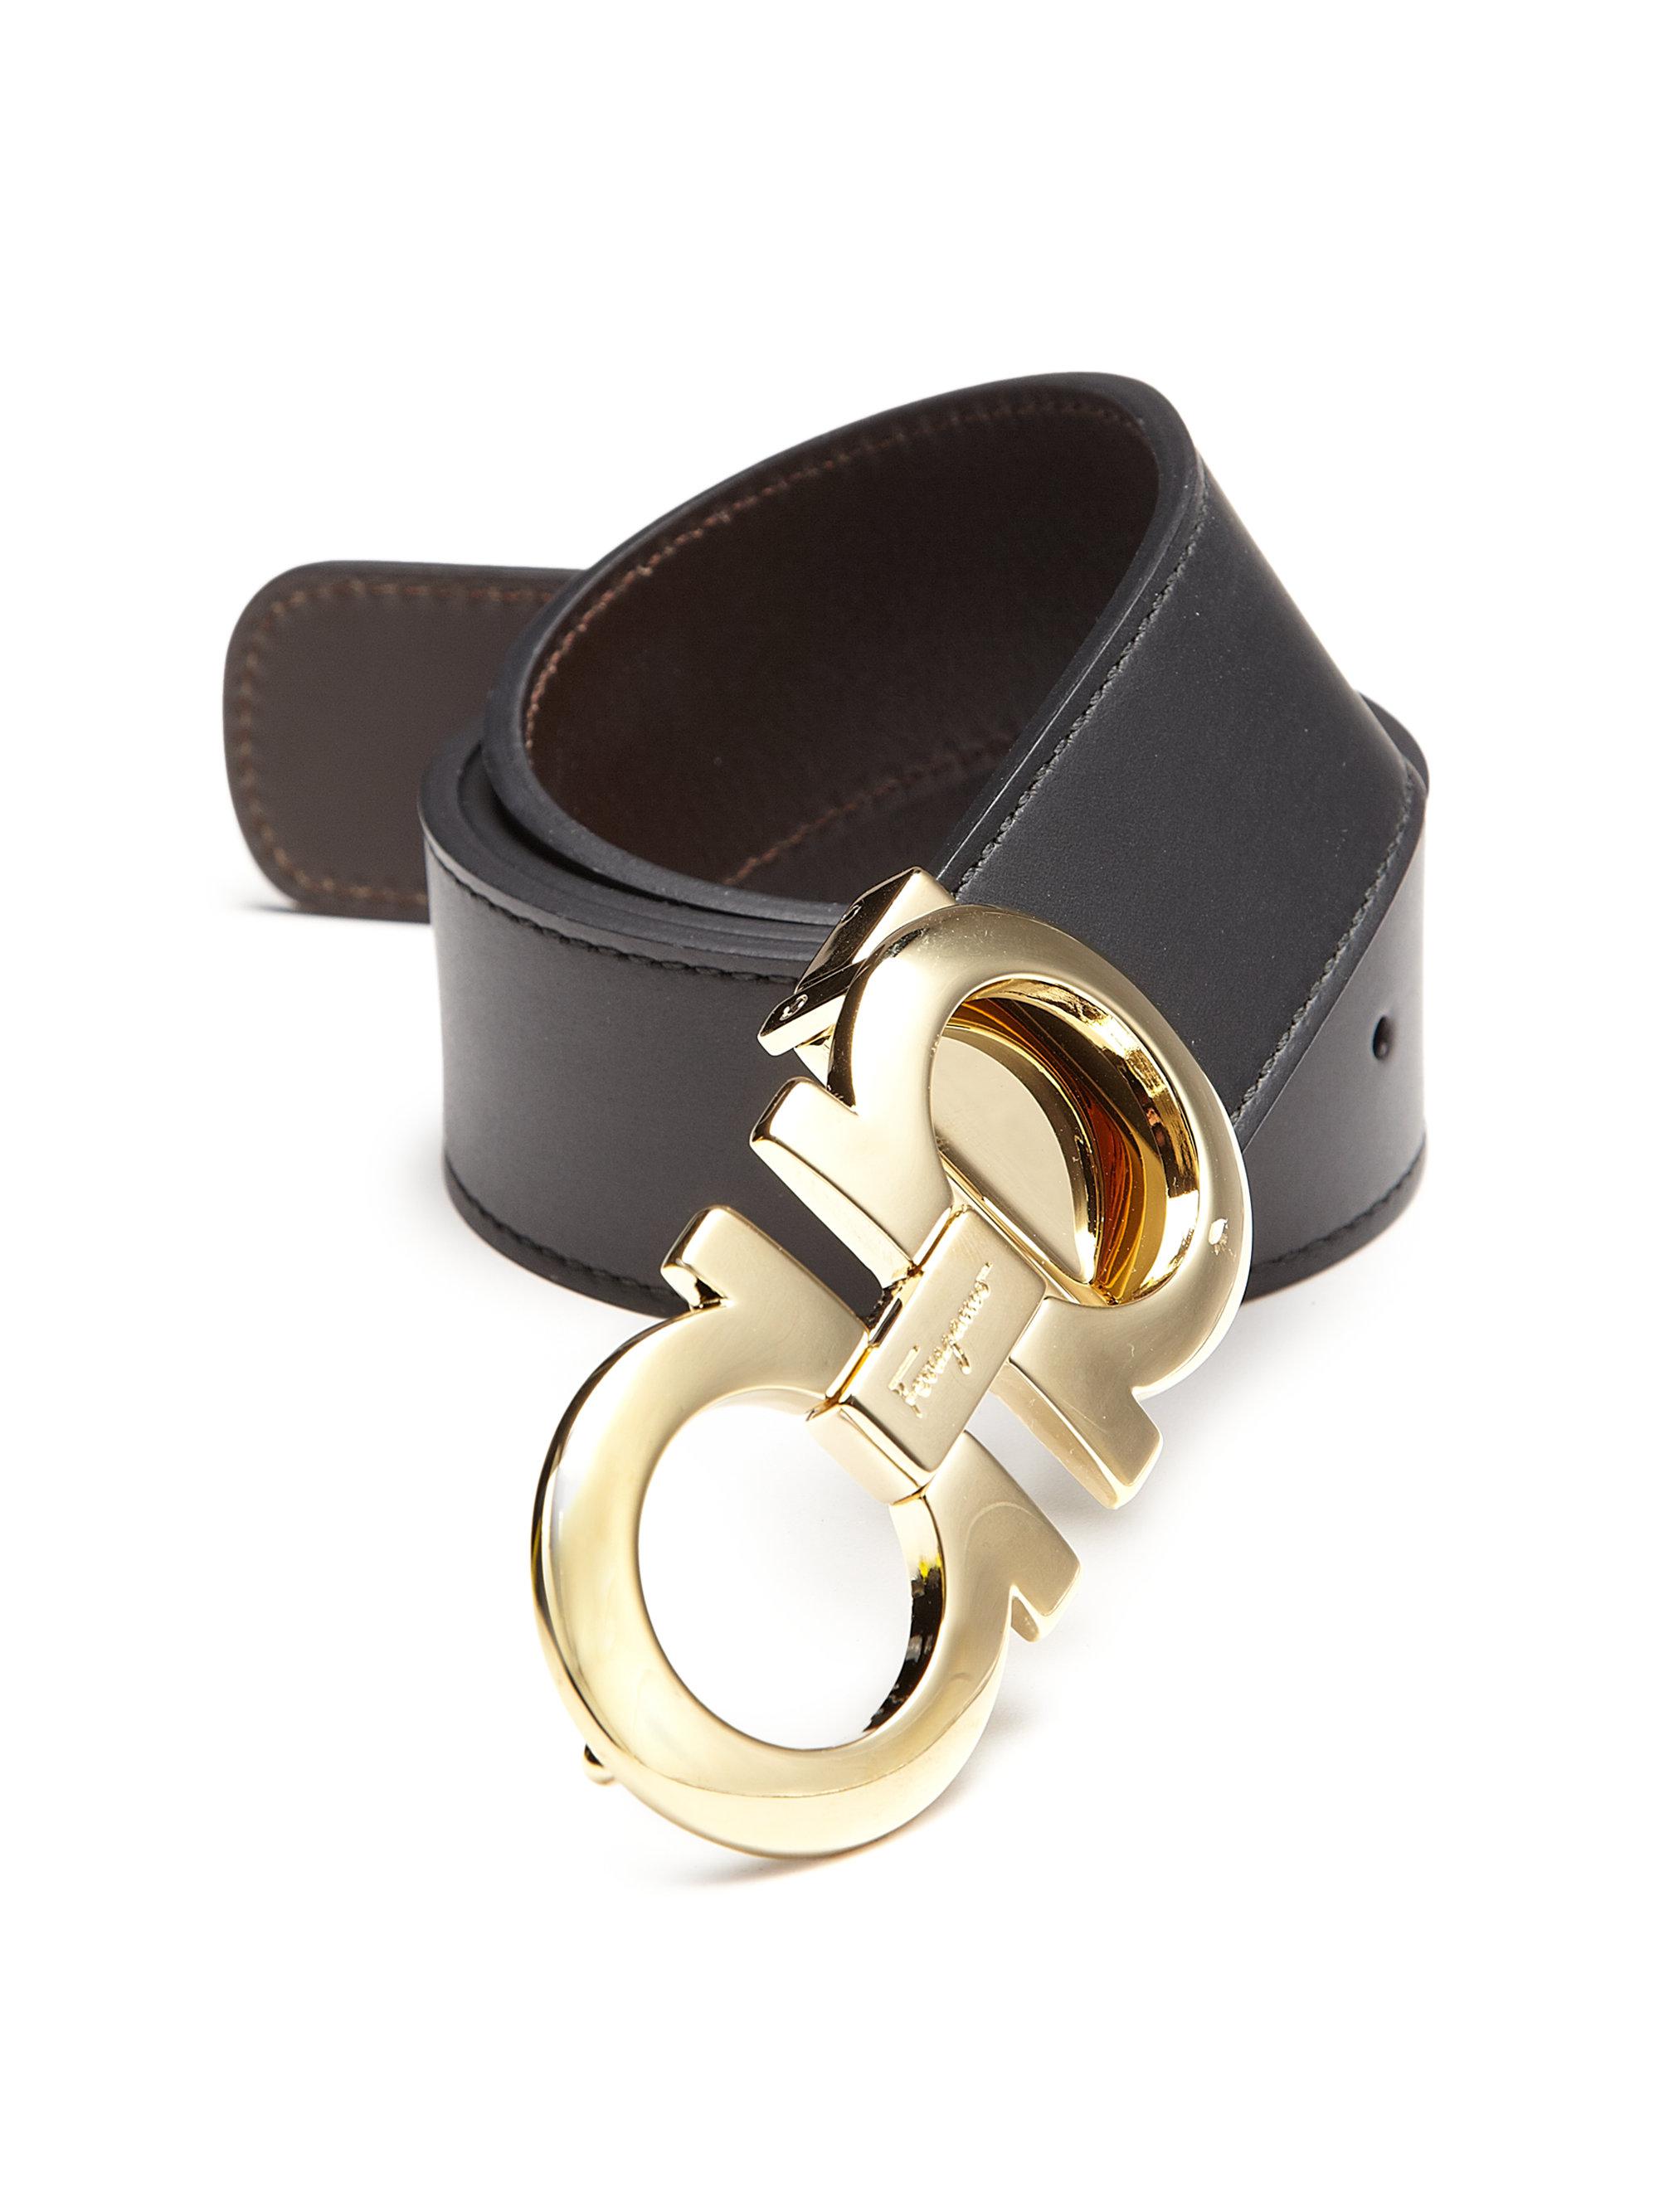 Lyst - Ferragamo Adjustable & Reversible Double Gancini Leather Belt in Black for Men